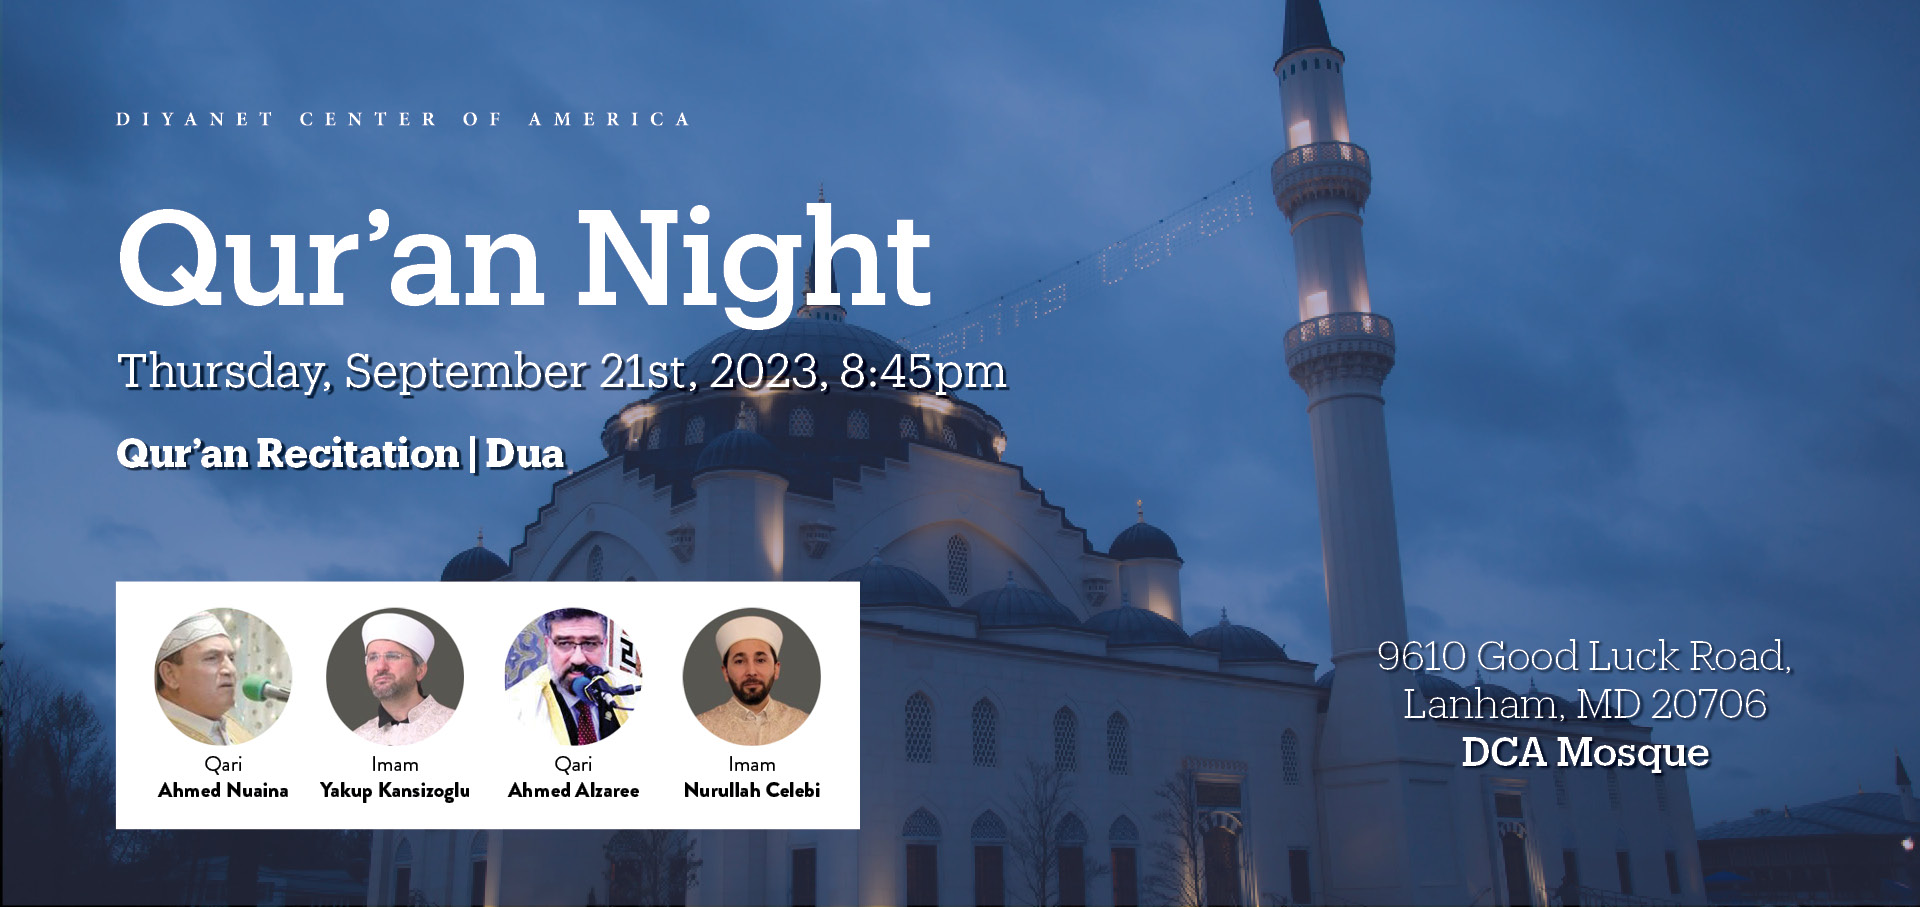 Qur'an Night 2023